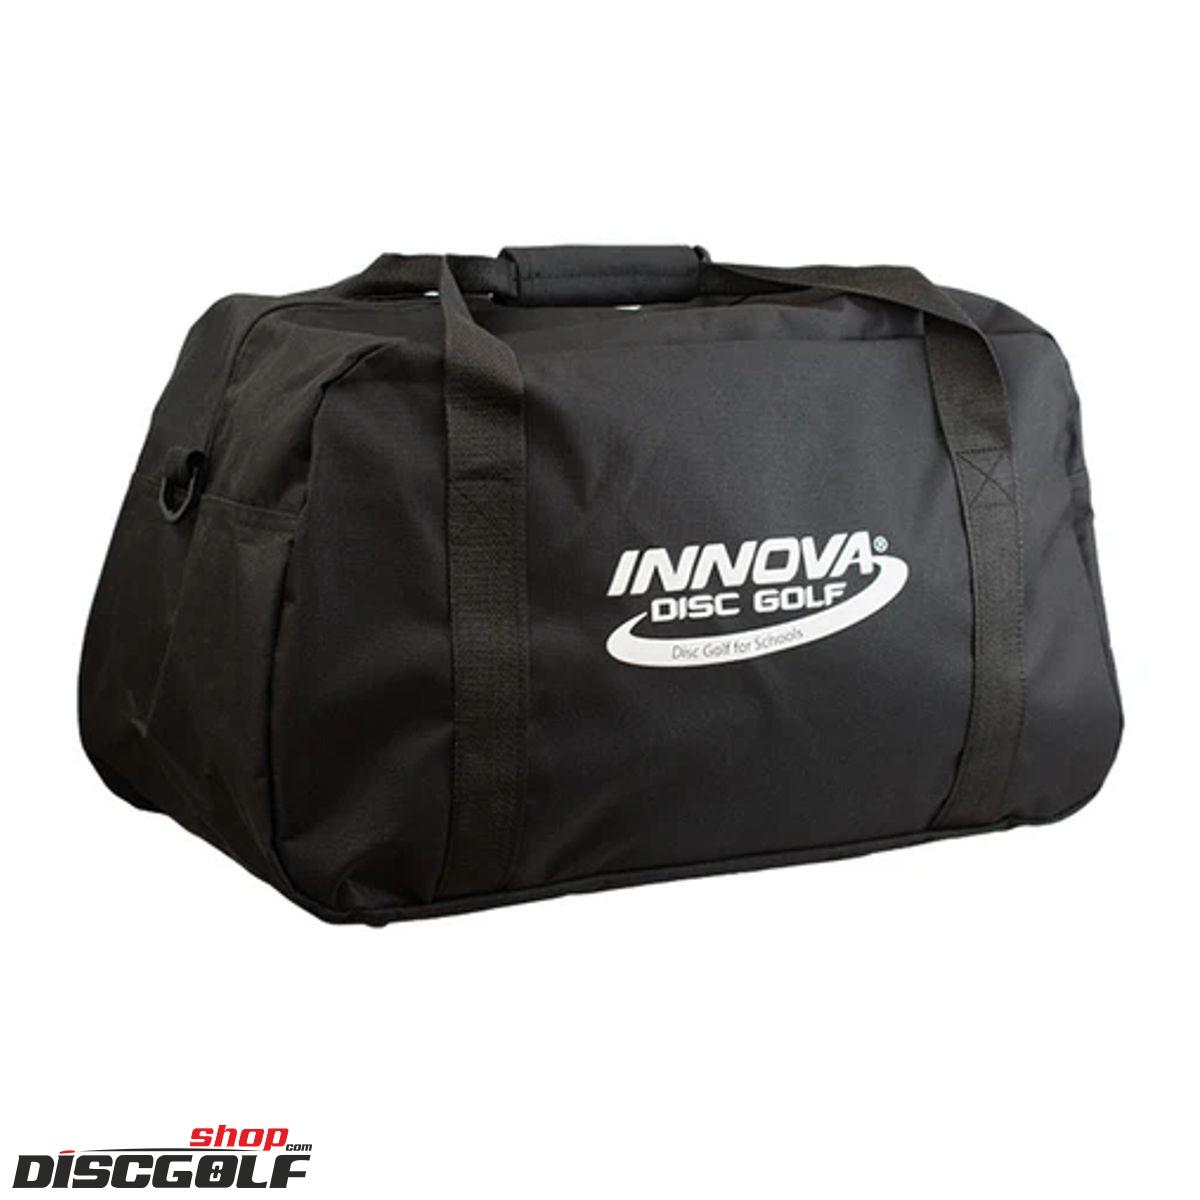 Innova Equipment Bag (discgolf)